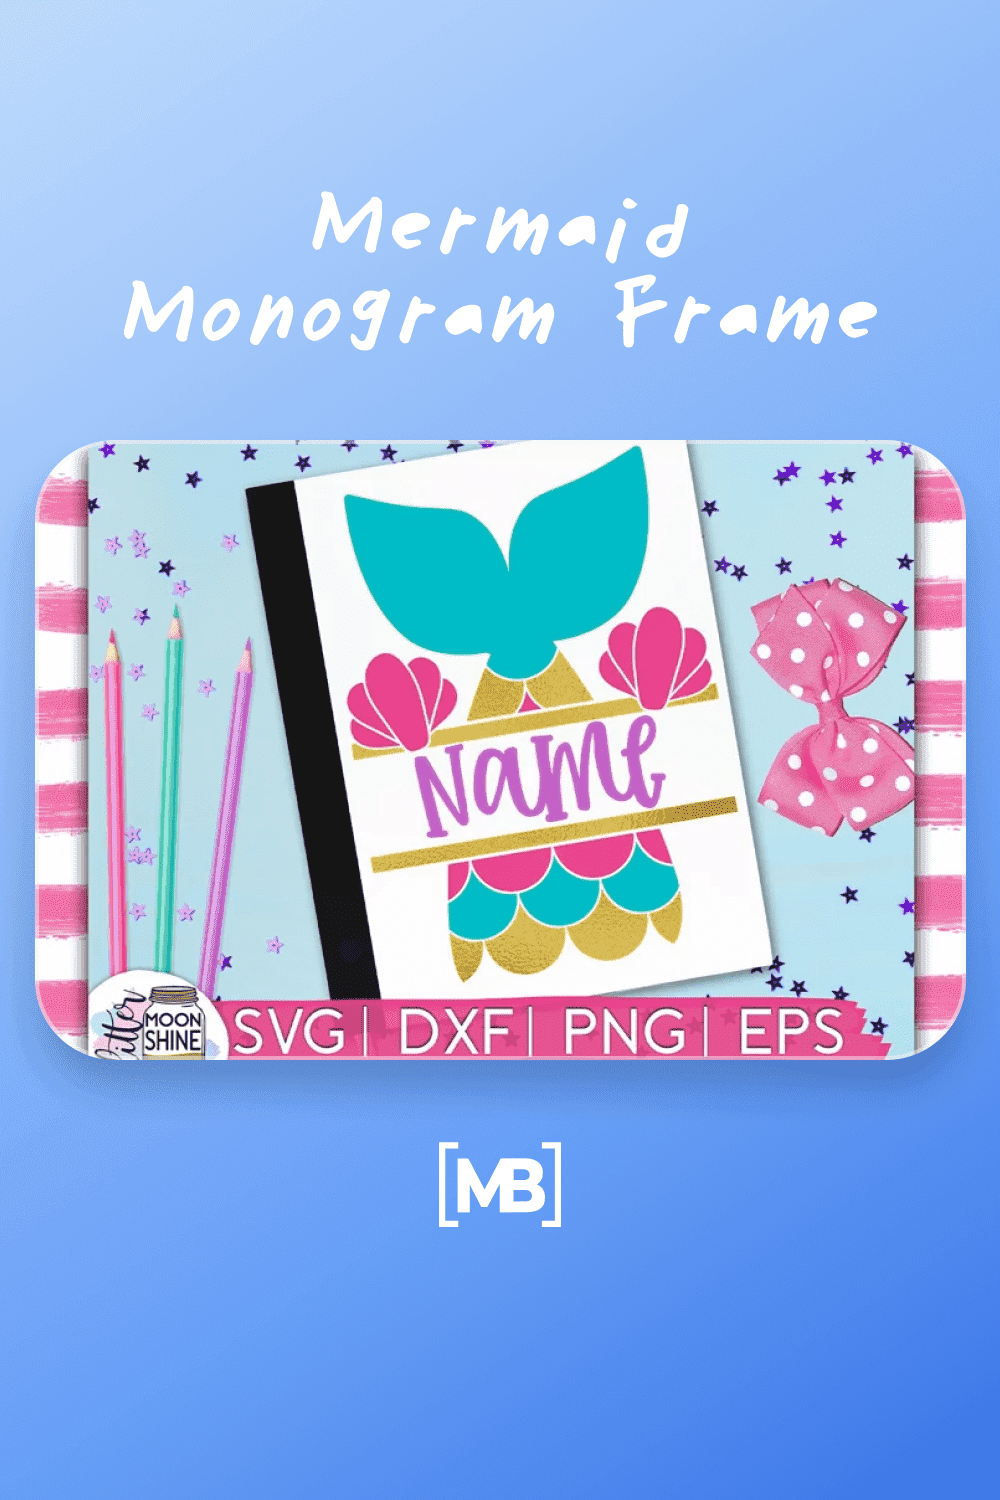 Mermaid Monogram Frame SVG DXF PNG EPS Cutting Files.